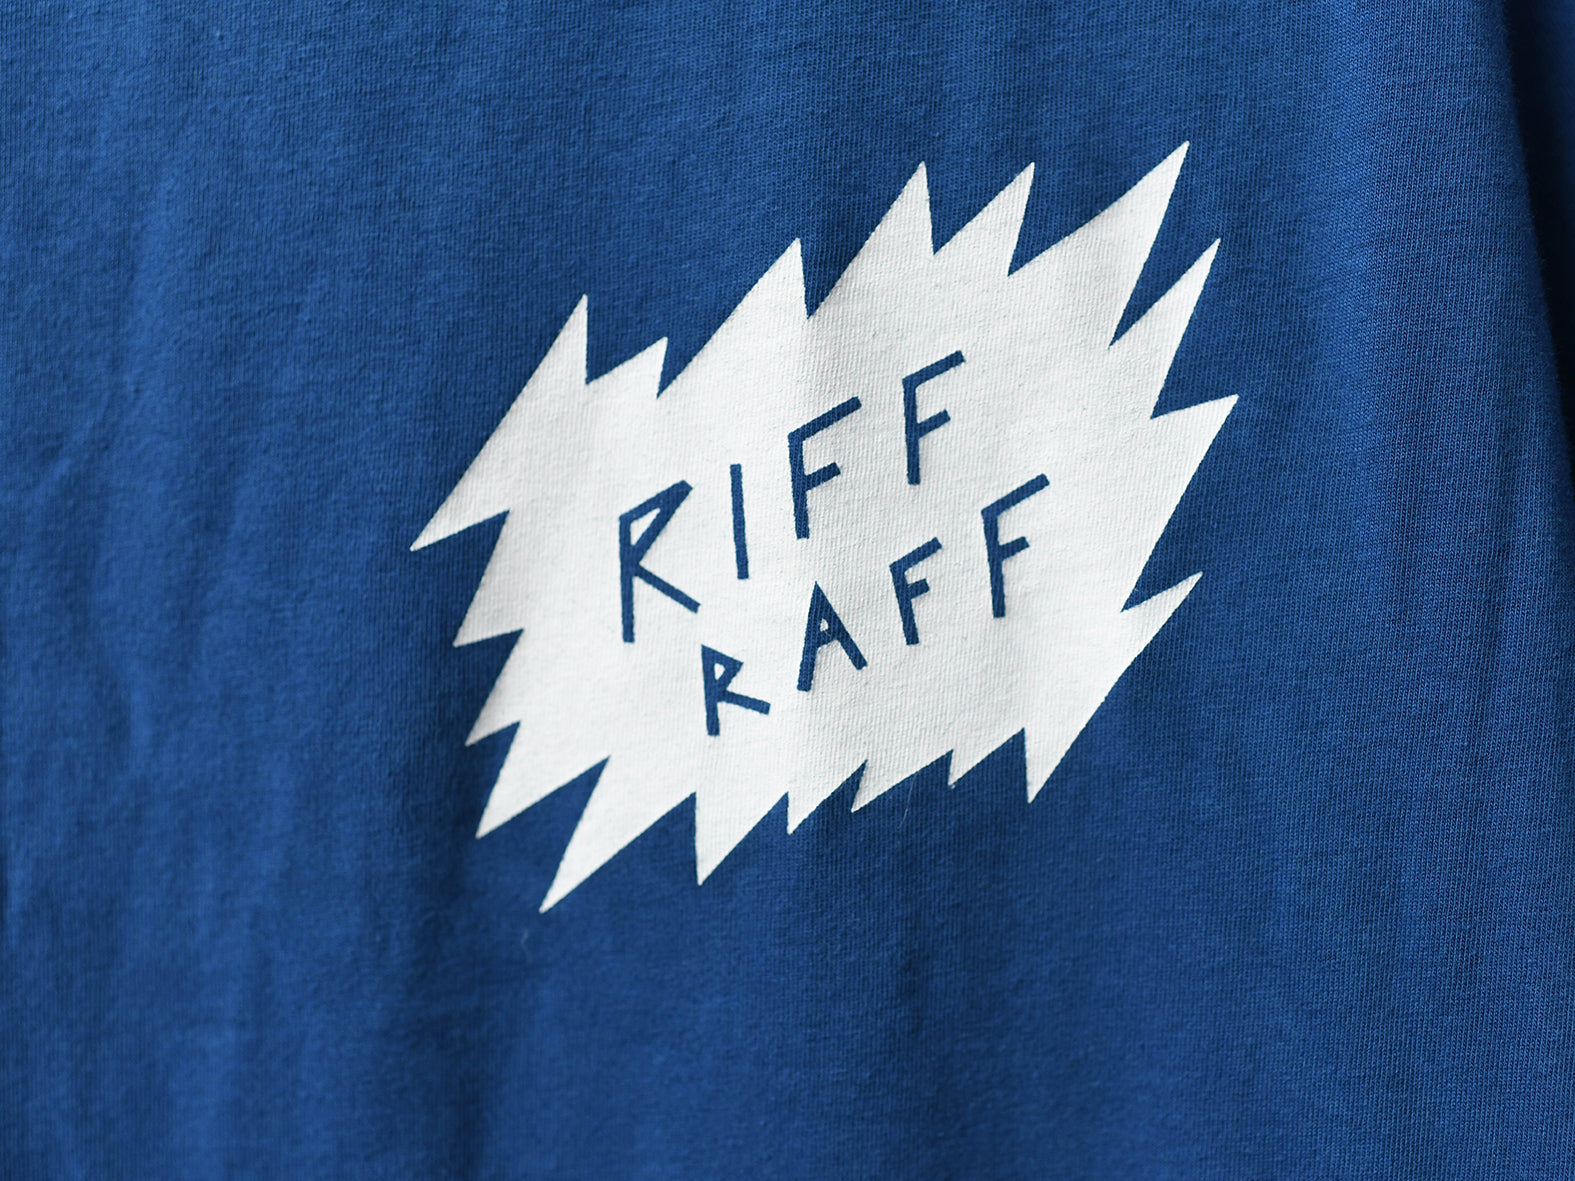 RIFF RAFF. CORNFLOWER BLUE.